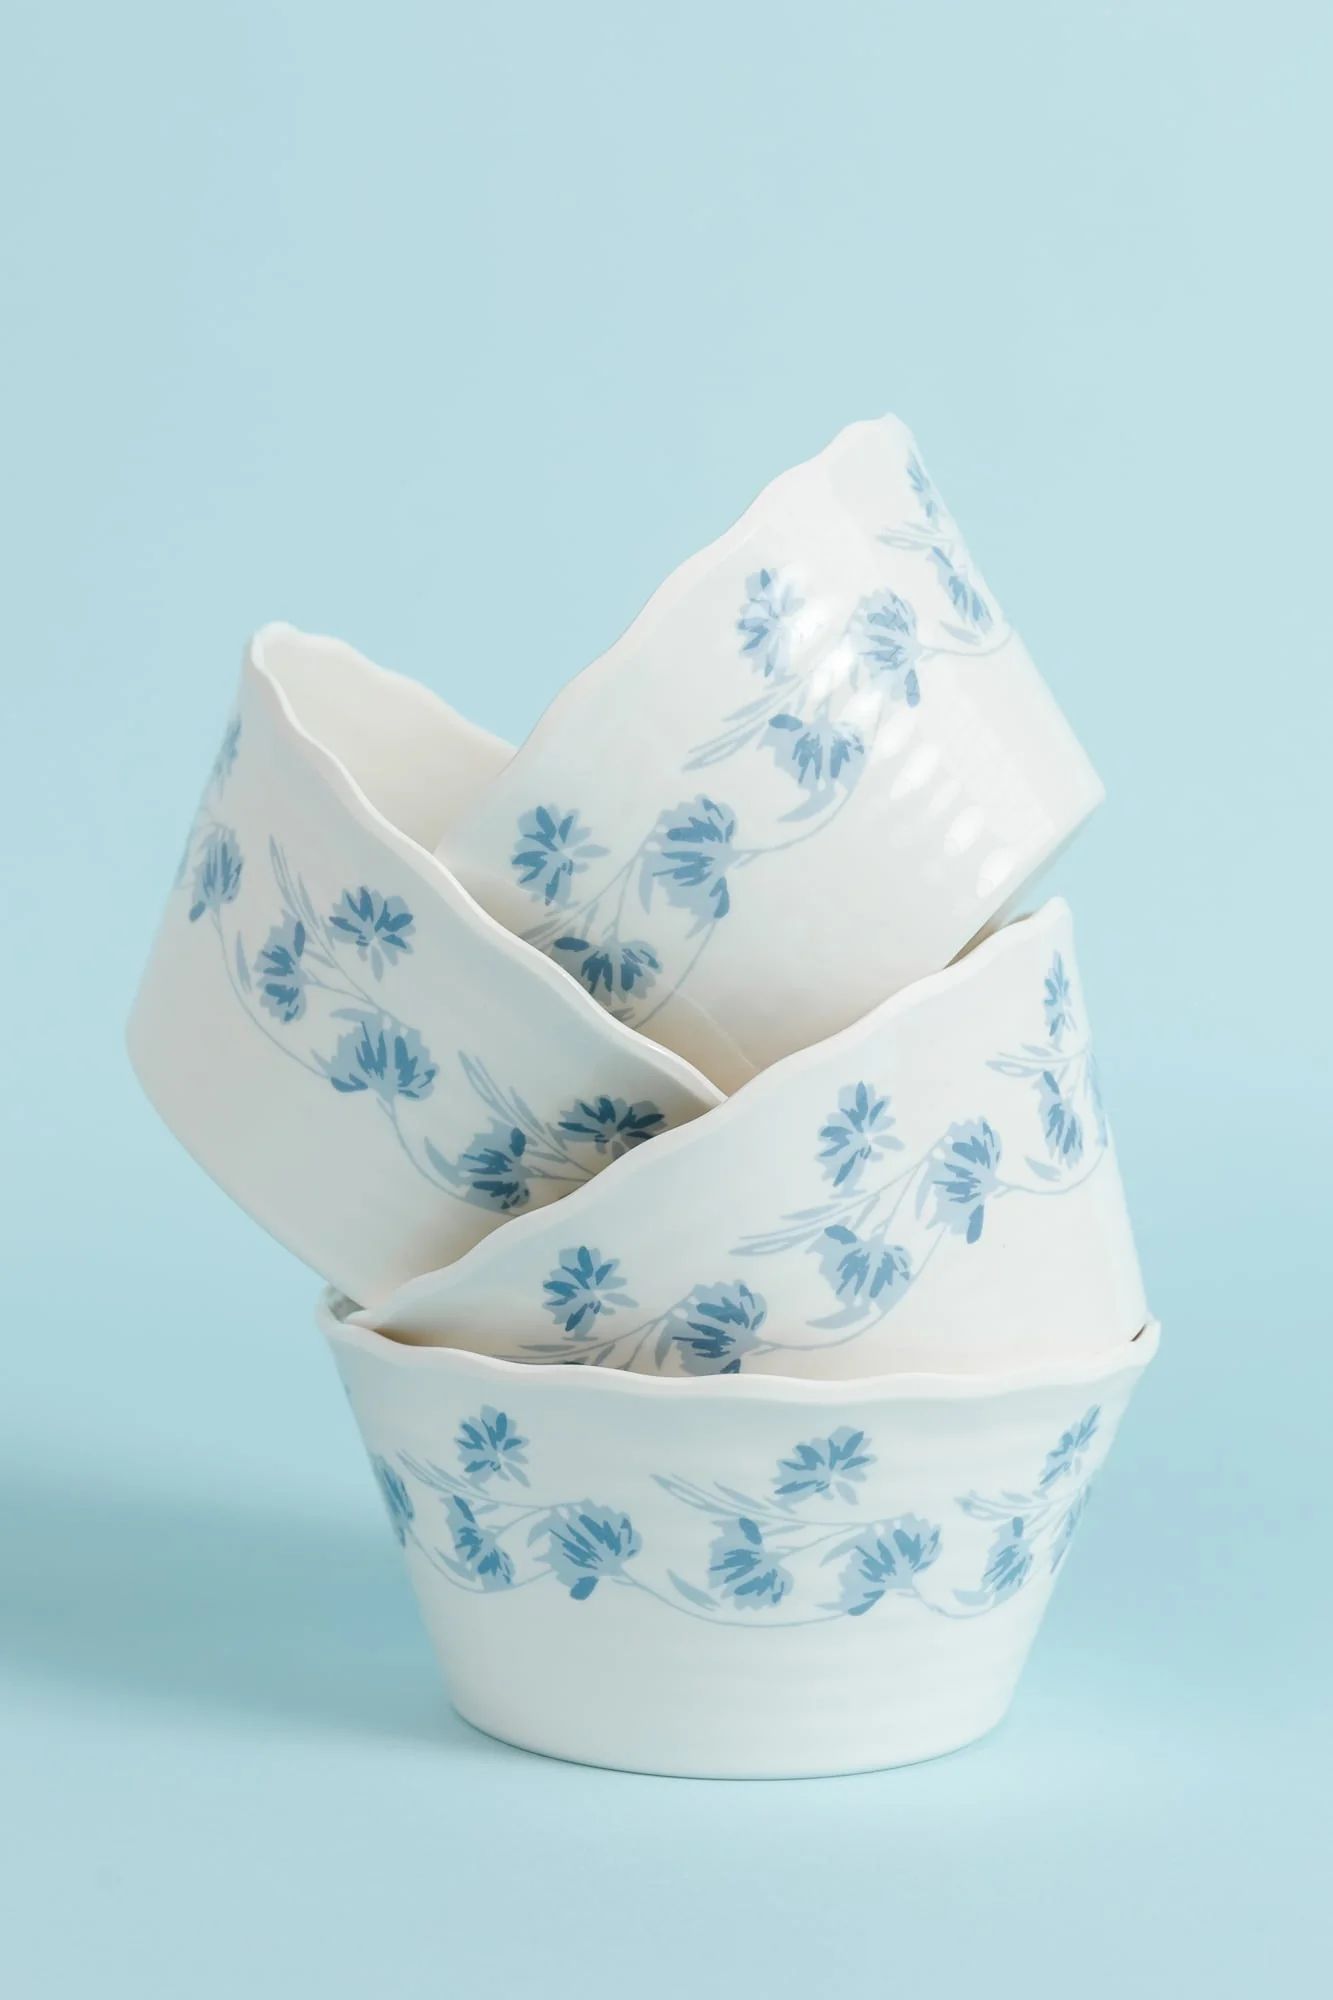 Botanical Melamine Bowls - Set of 4 | Rachel Parcell